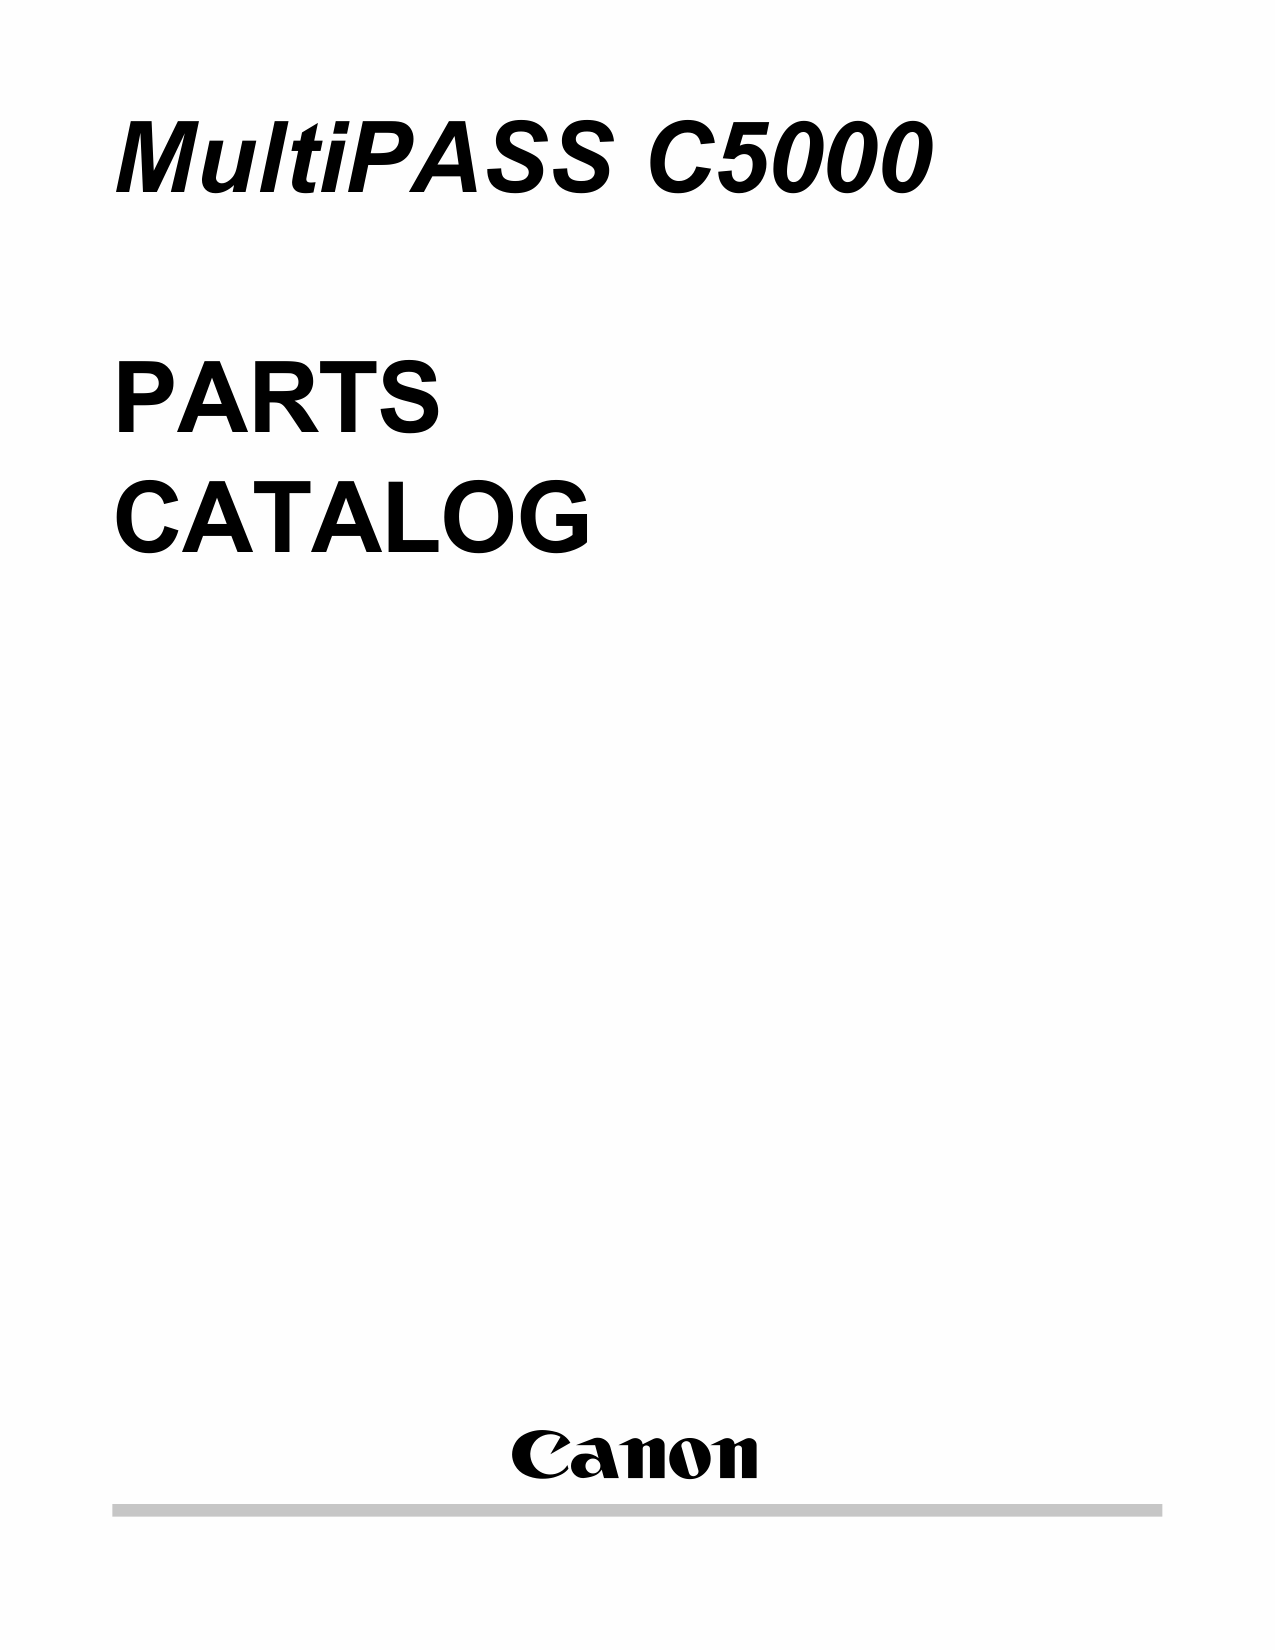 Canon MultiPASS MP-C5000 Parts Catalog Manual-1